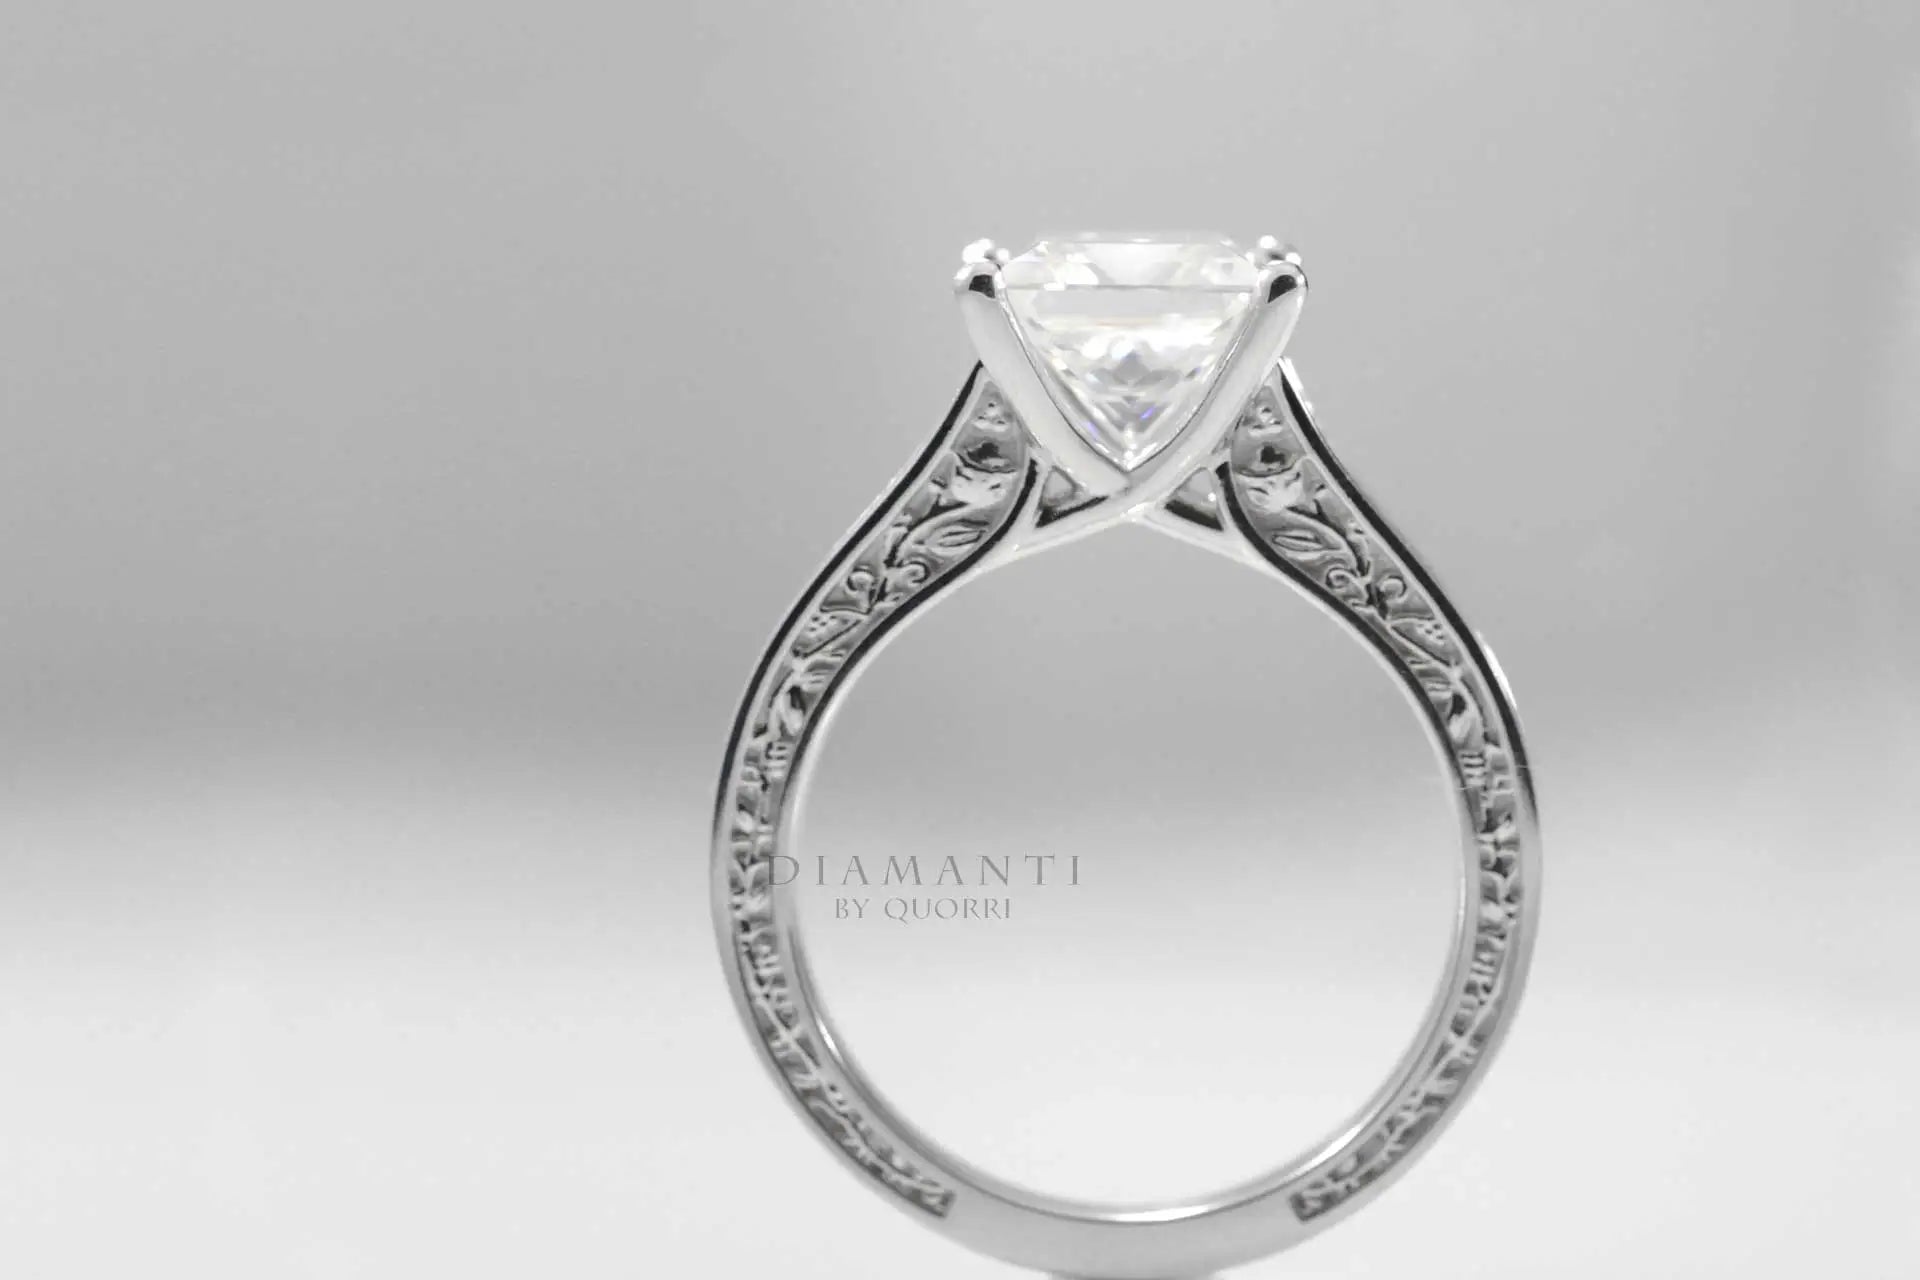 rose engraved 18k white gold 3 carat princess cut lab diamond engagement ring at Quorri Canada